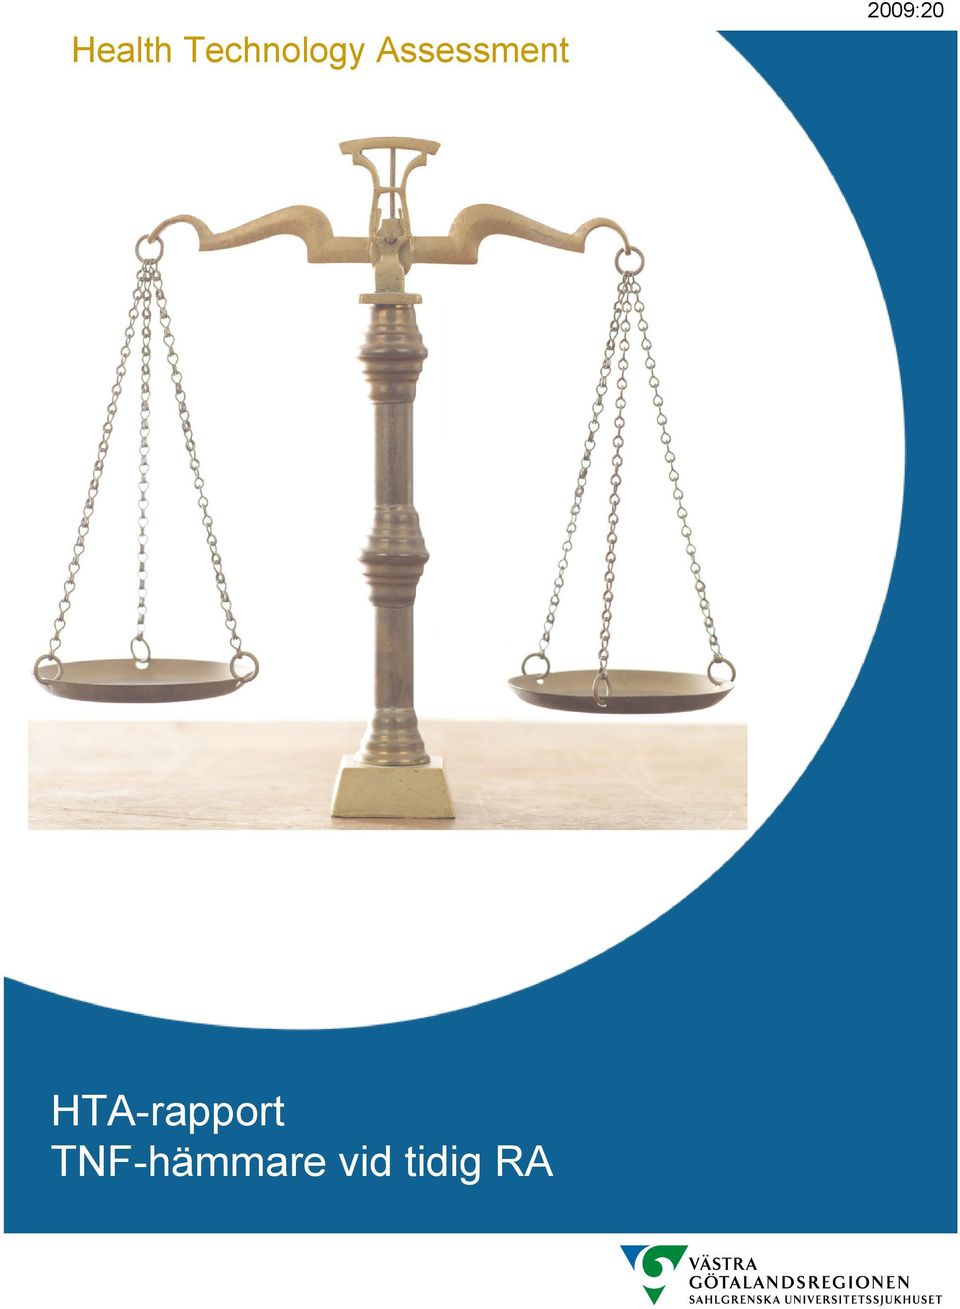 HTA-rapport